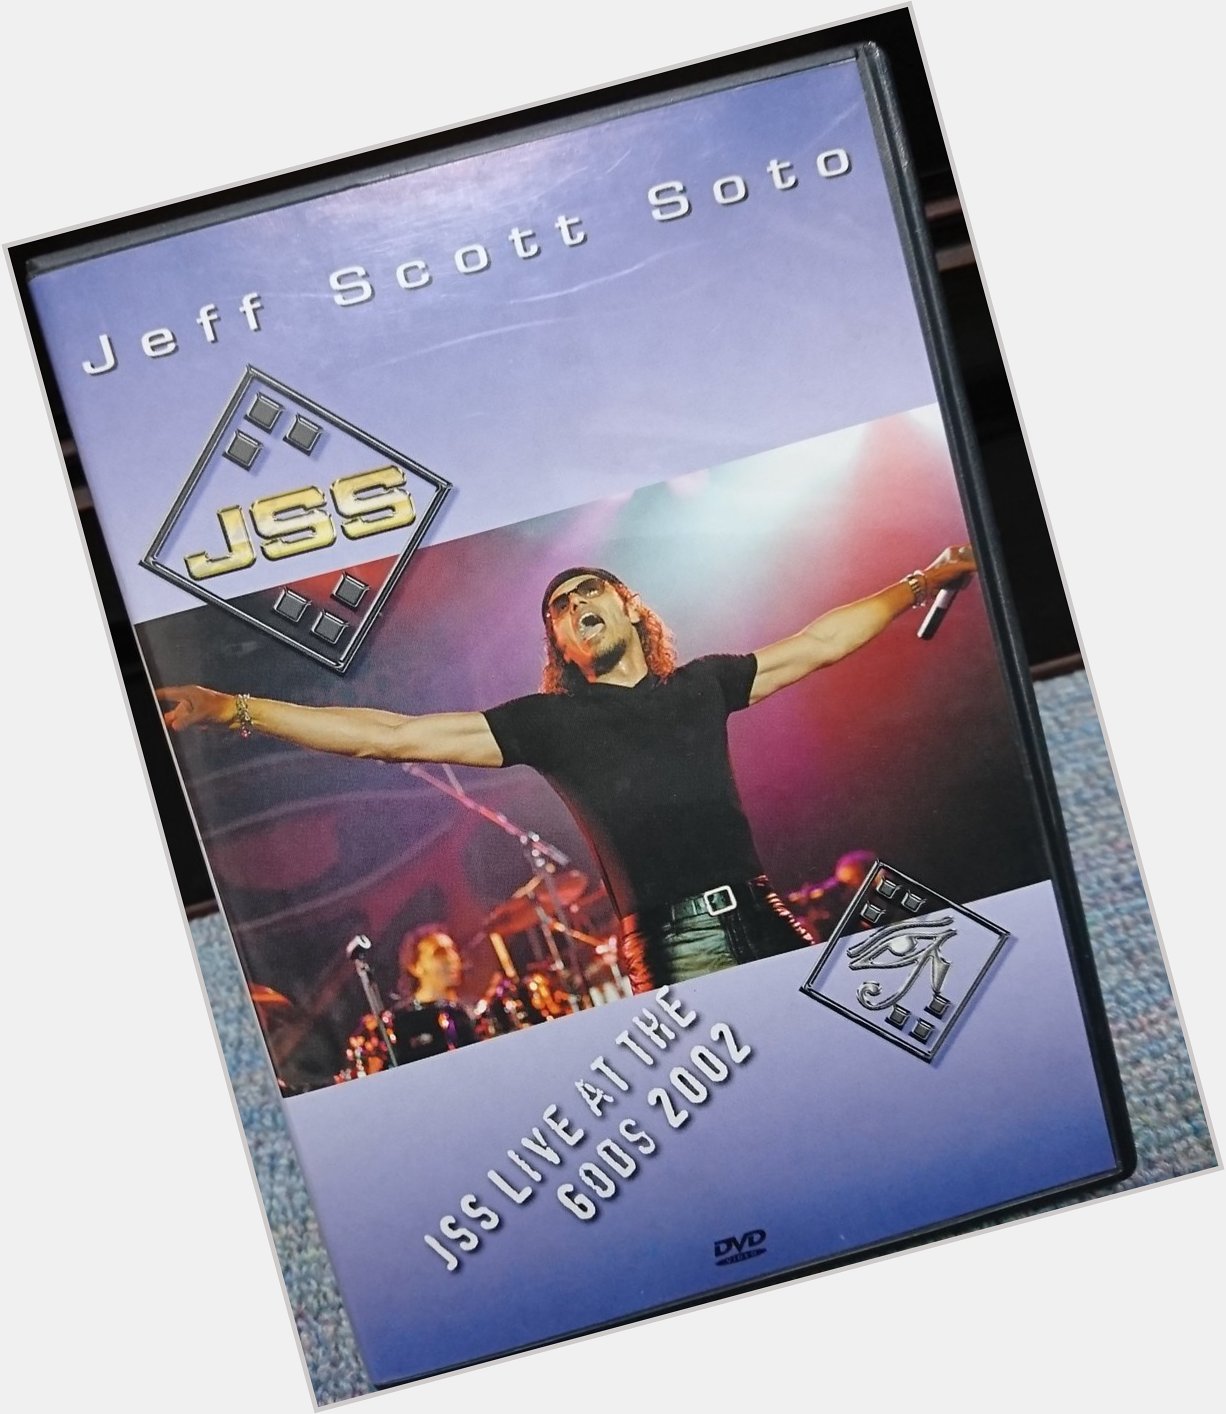 NowPlaying - JSS Live at The GODS 2002 / Jeff Scott Soto
Happy birthday! 